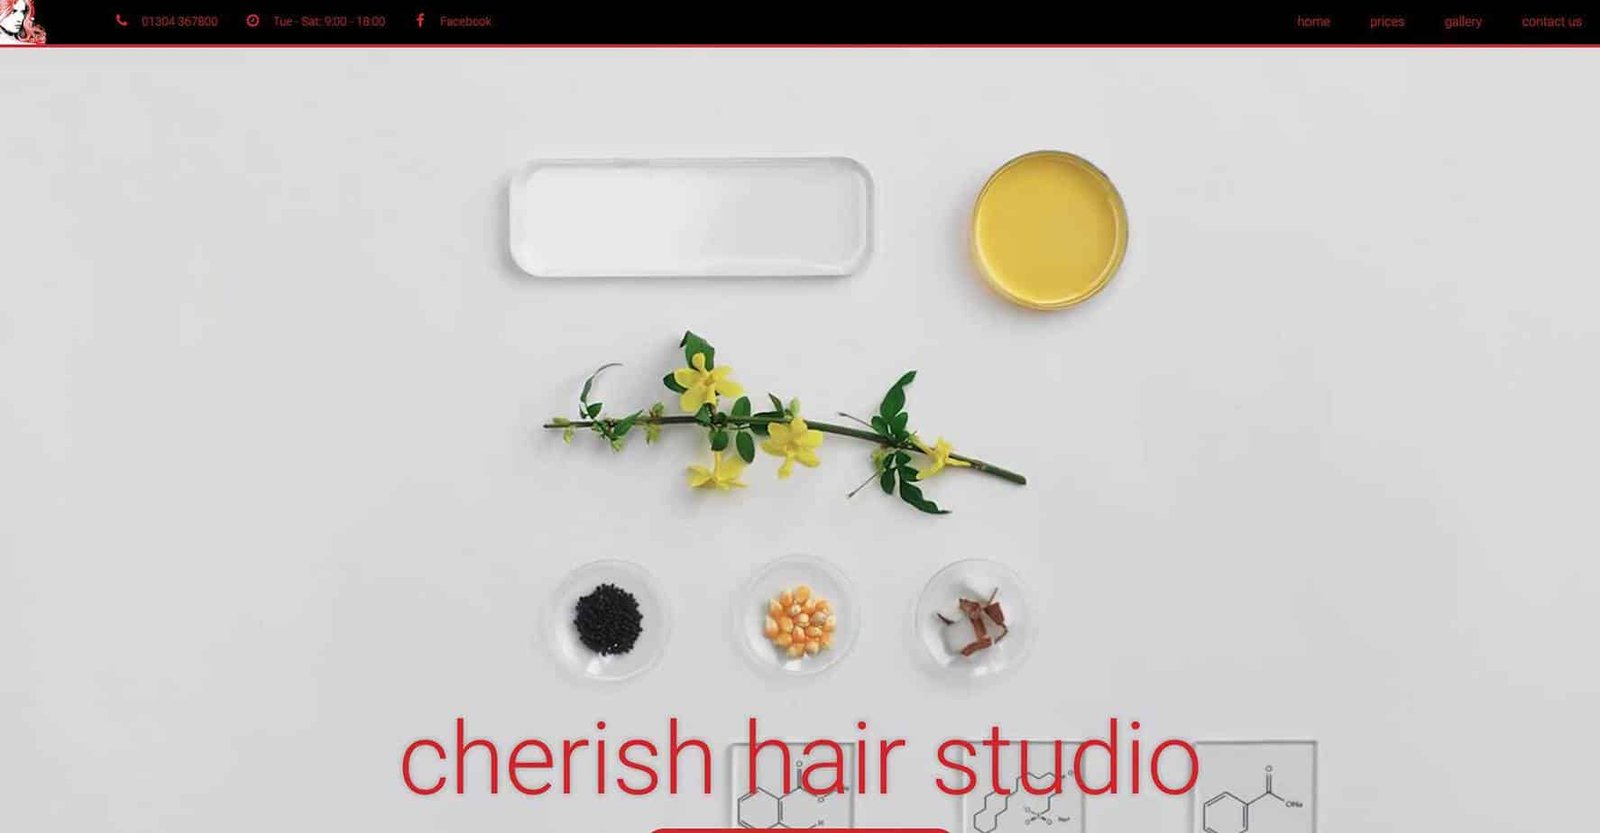 Cherish Hair Studio website by Blue Orbit Design